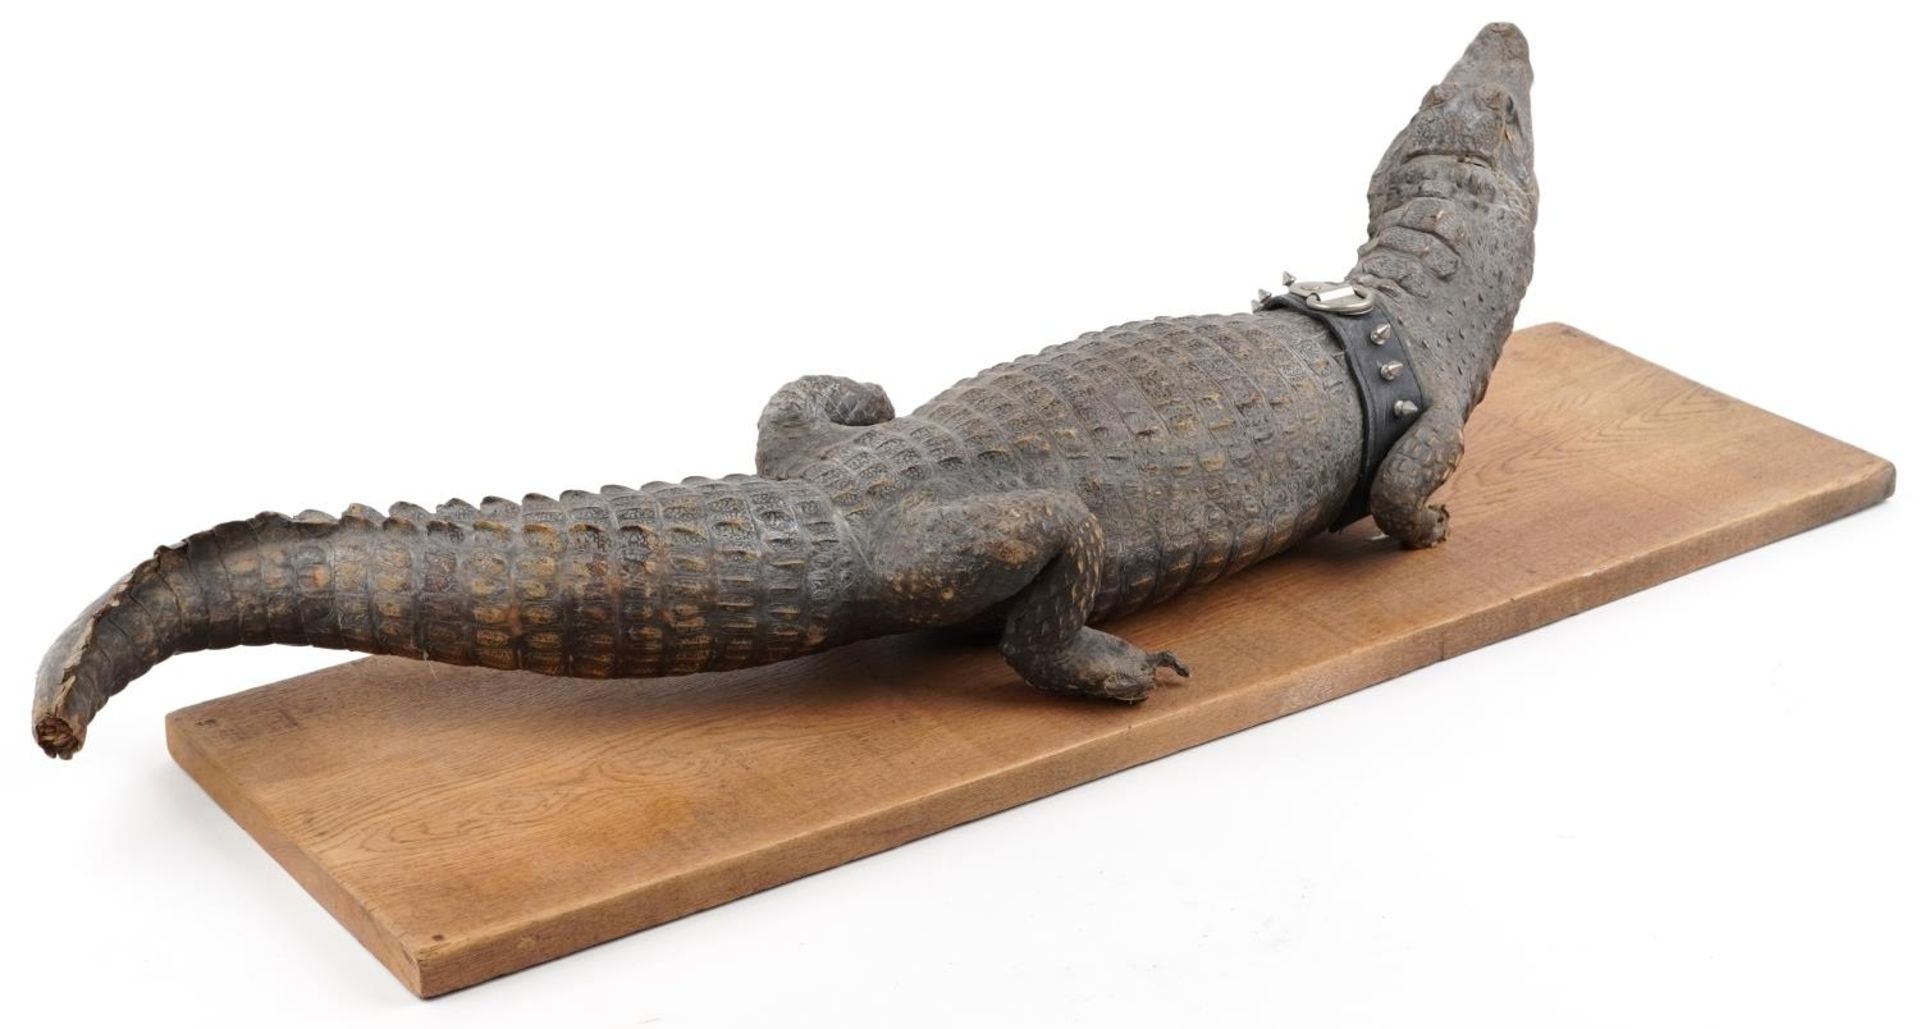 Taxidermy interest crocodile on hardwood base, 94.5cm in length - Image 3 of 3